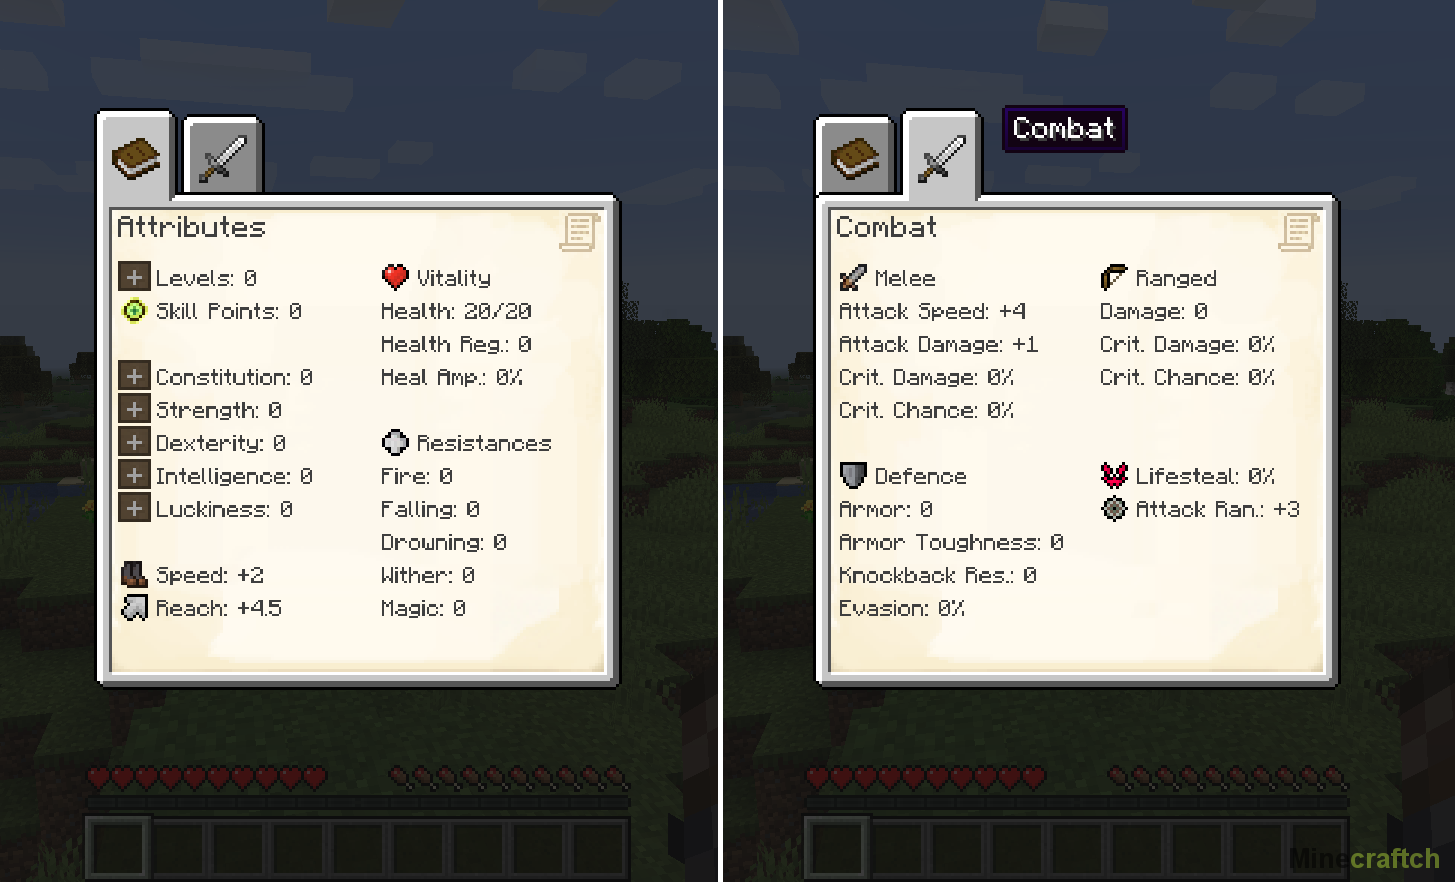 PlayerEx MOD para Minecraft 1.16.5 - Atributos RPG